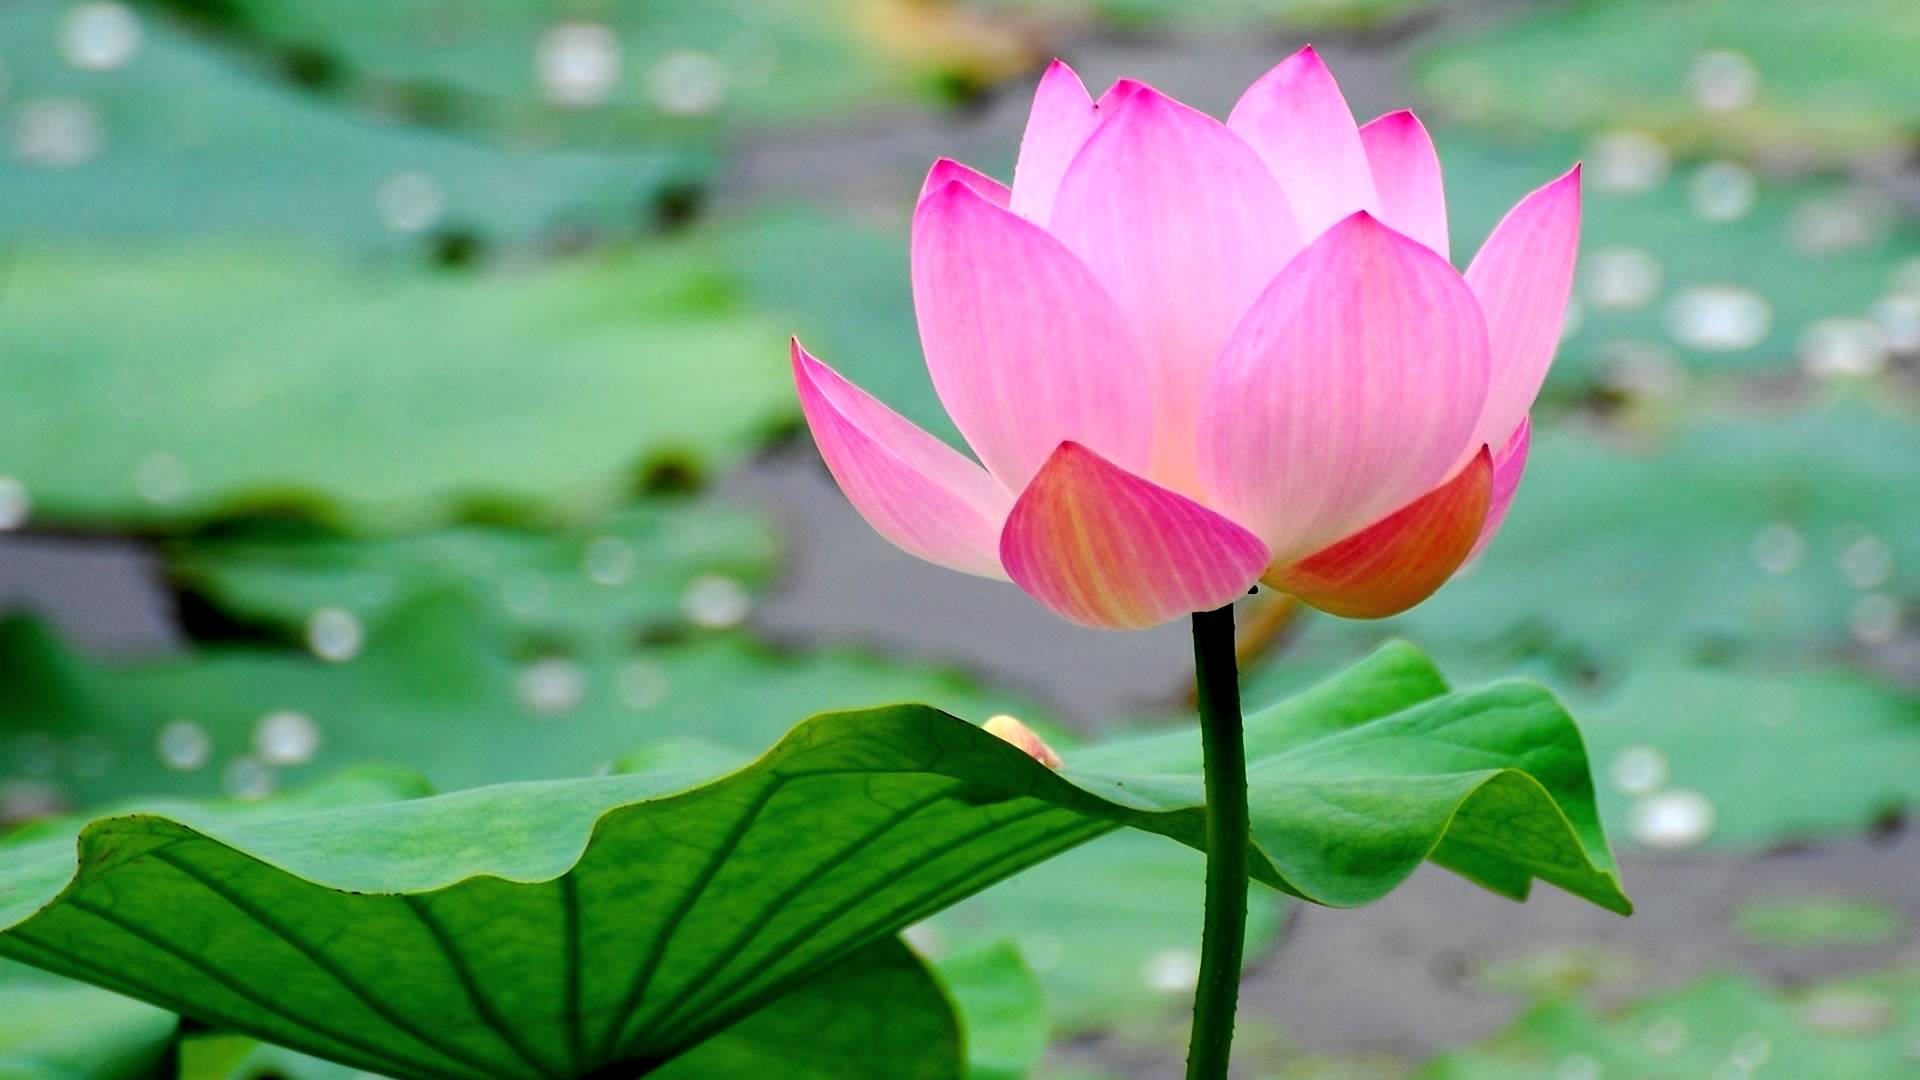 Buddhist Chant - Praise of the Lotus Pond (HD) - YouTube